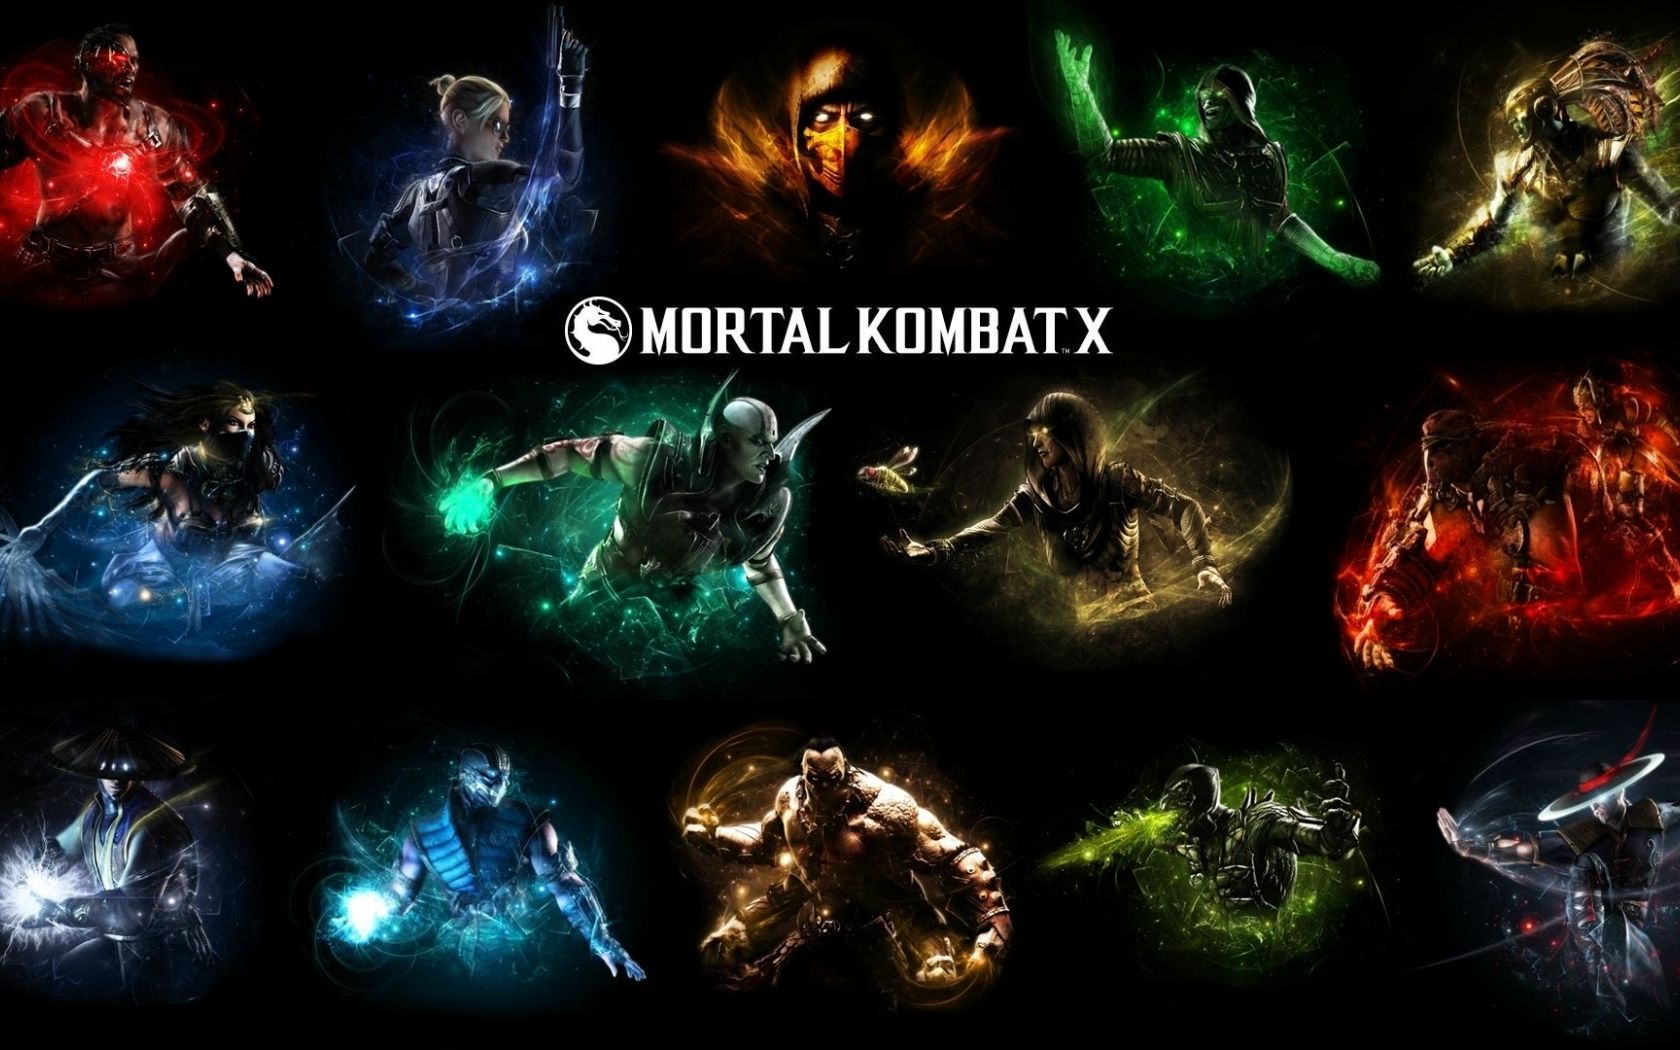 Free download Gorgeous Mortal Kombat X Wallpaper Full HD Picture [1920x1080] for your Desktop, Mobile & Tablet. Explore Mortal Combat Wallpaper. Mortal Combat Wallpaper, Mortal Combat Wallpaper, Combat Wallpaper